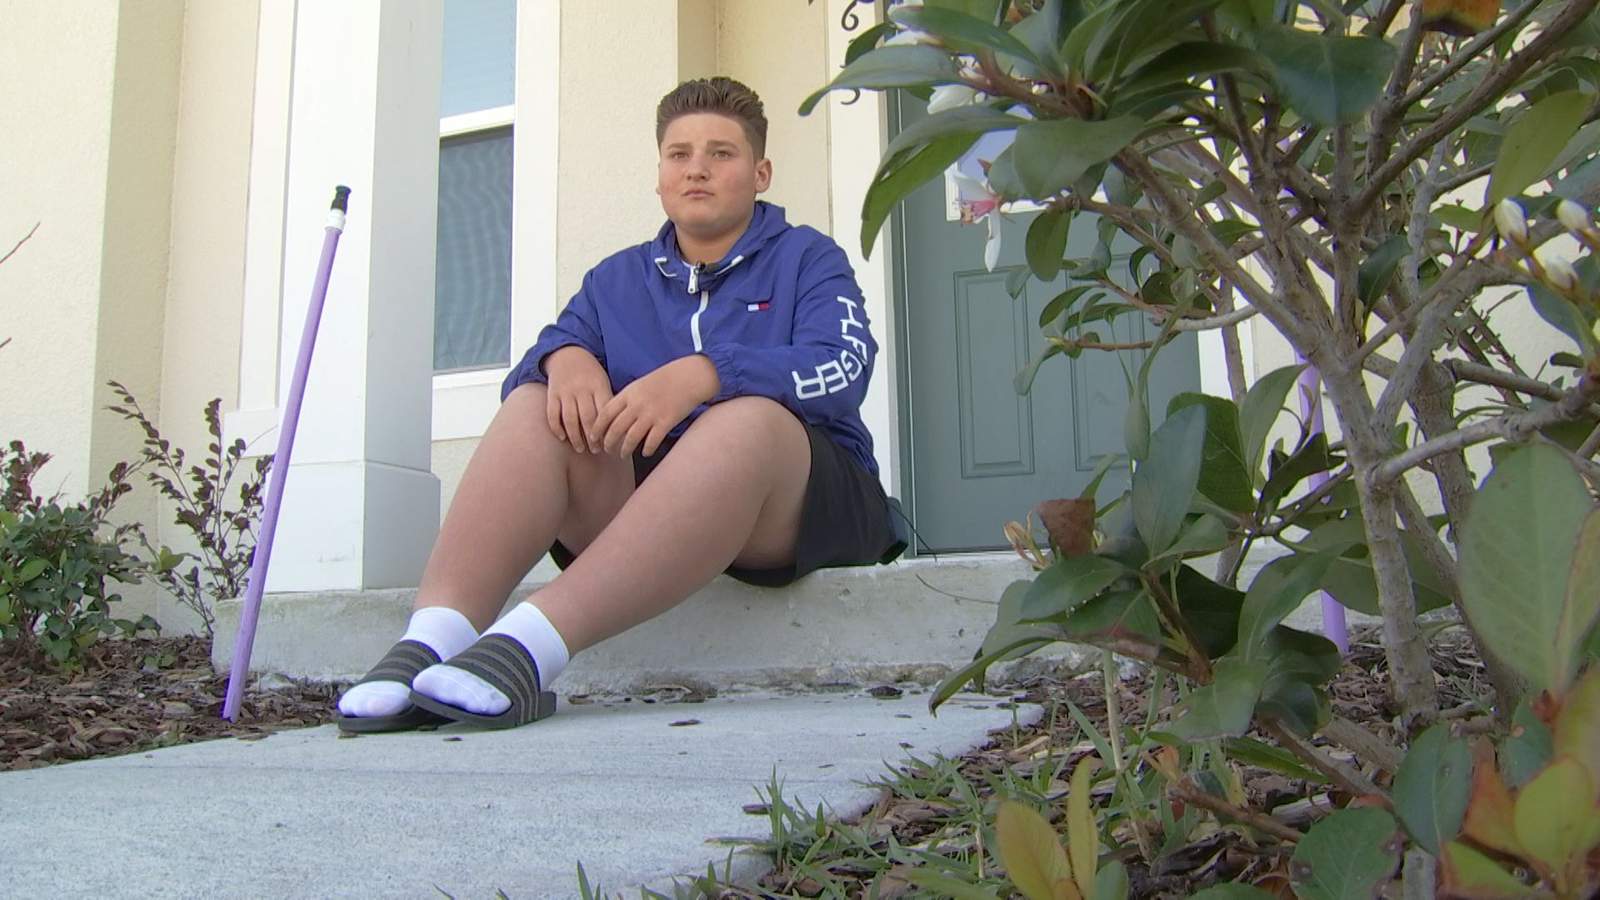 Heroic walk from school earns teen News 6 Getting Results Award